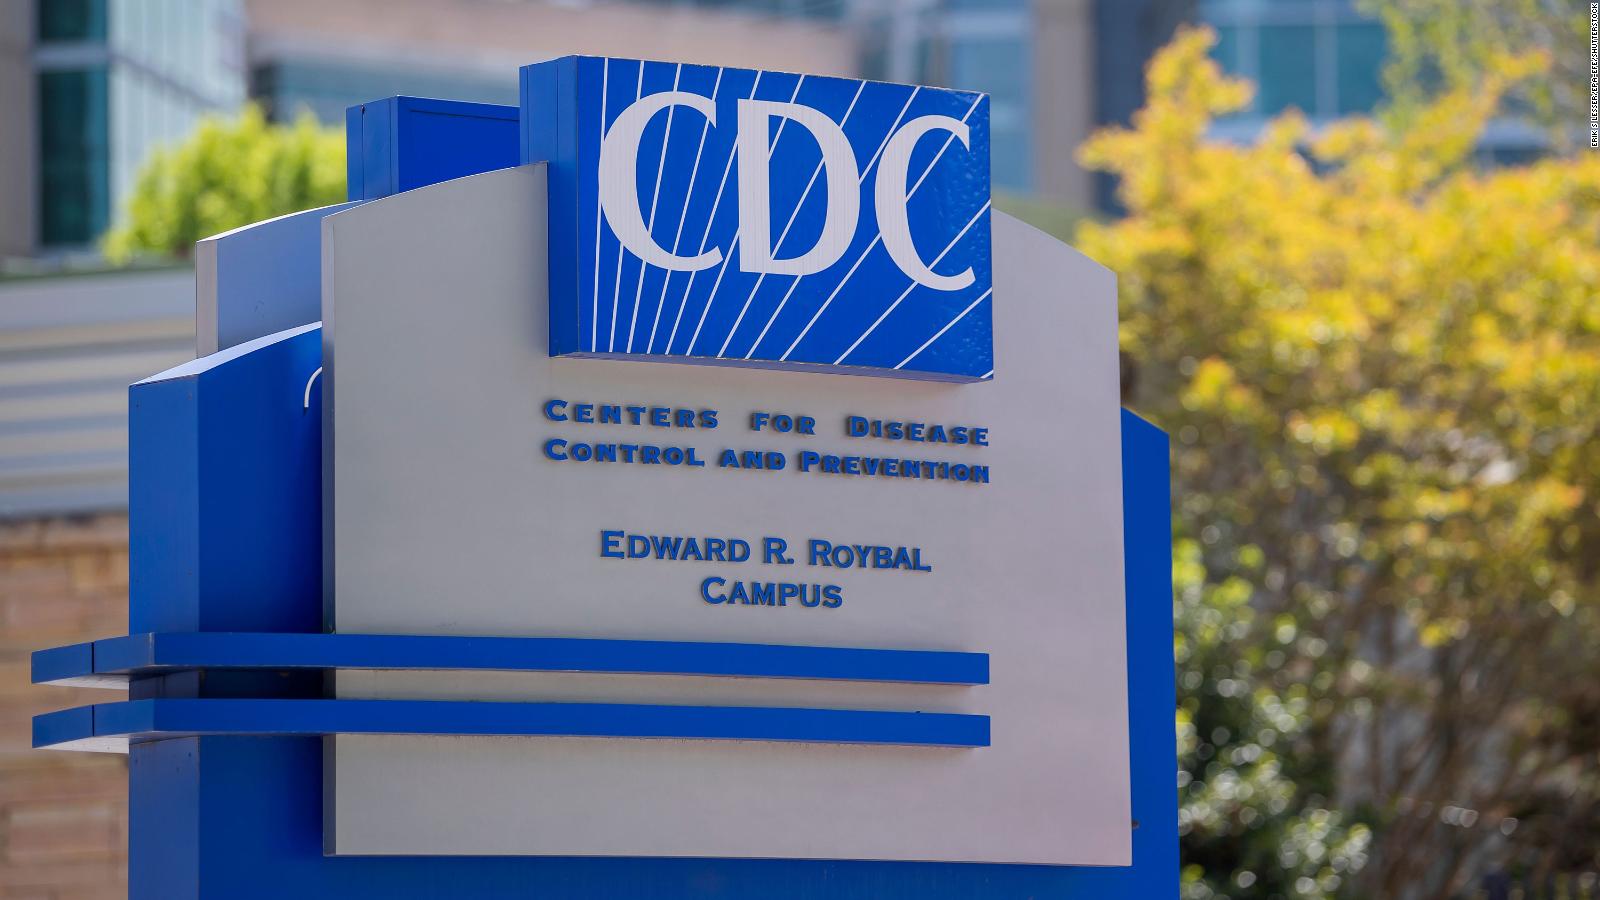 cdc ebola travel restrictions